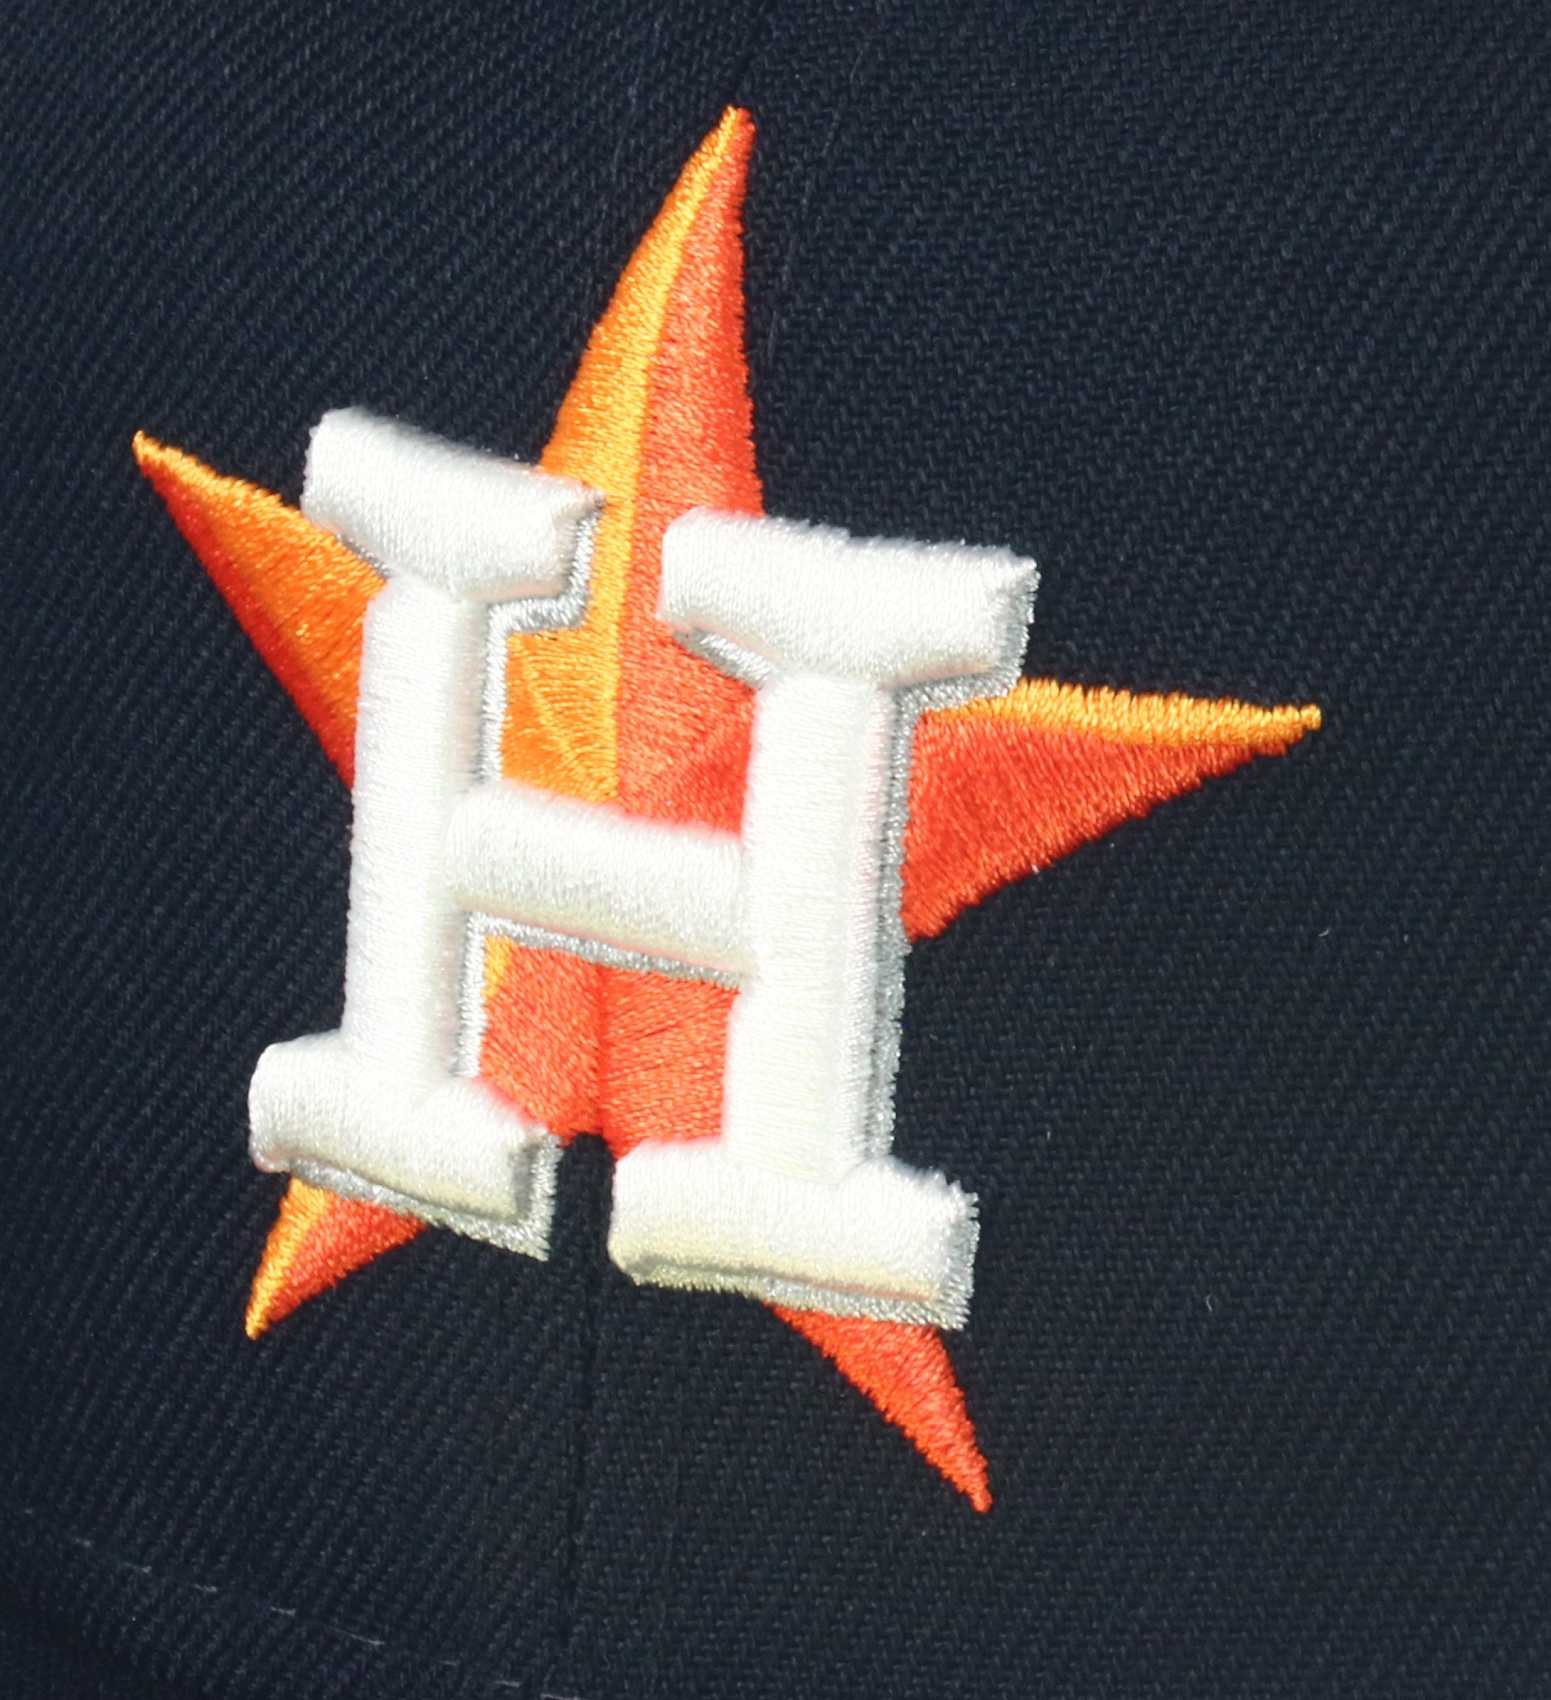 Houston Astros MLB AC Performance Navy 59Fifty Basecap New Era